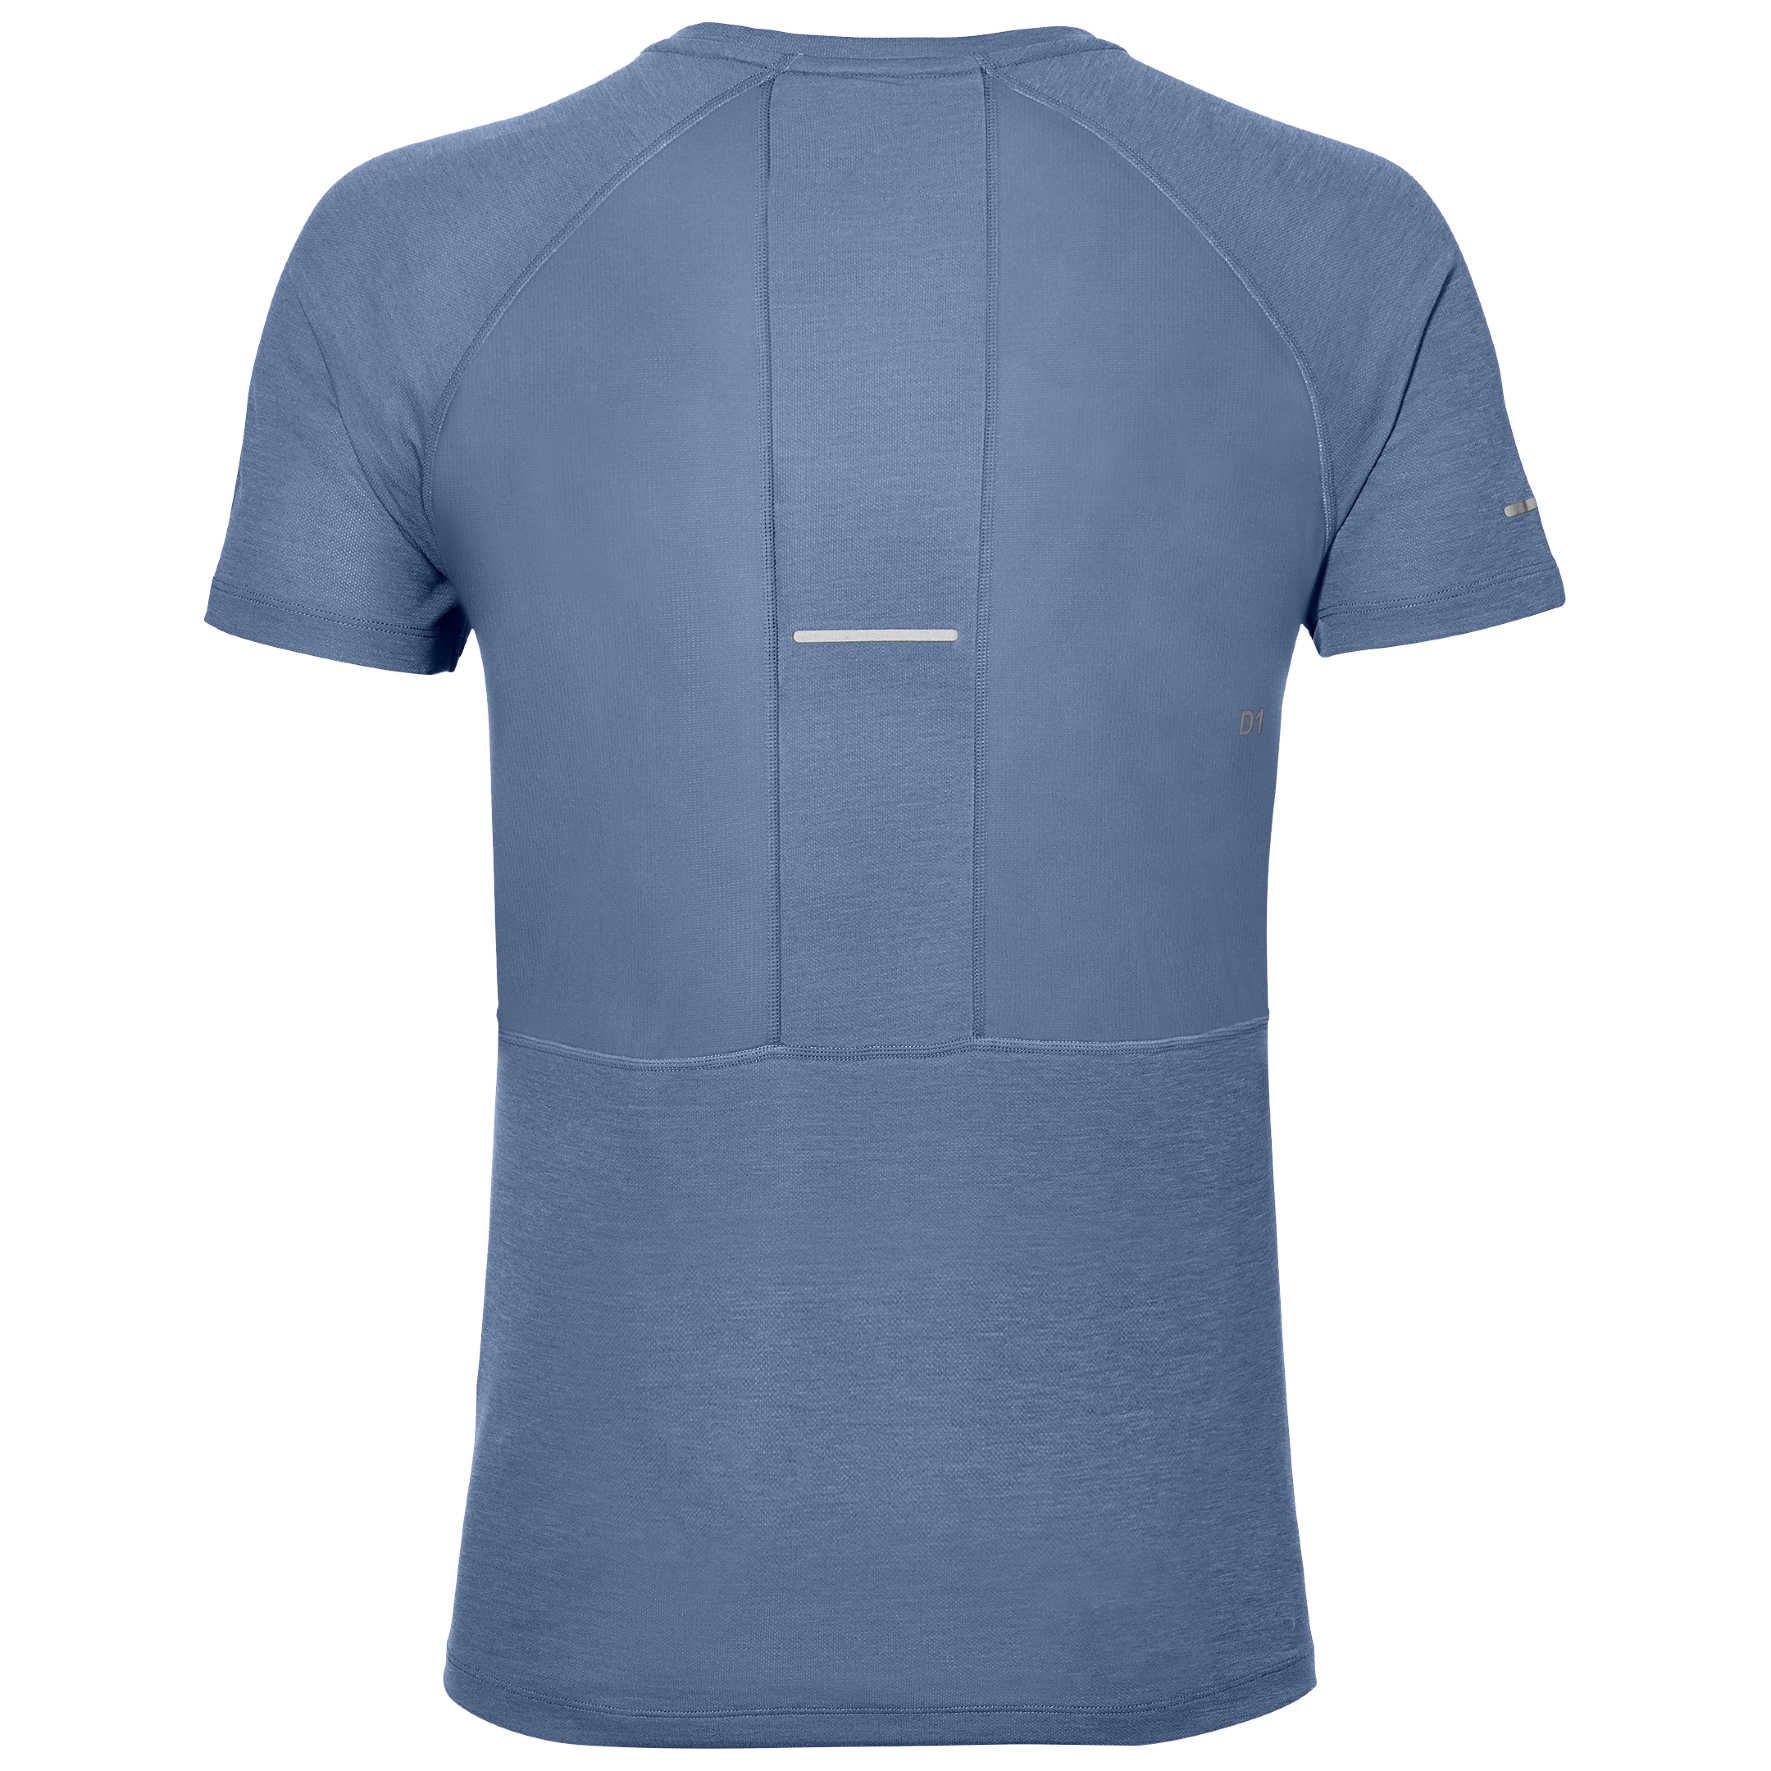 Devant T-shirt SS Top -  Dark Blue